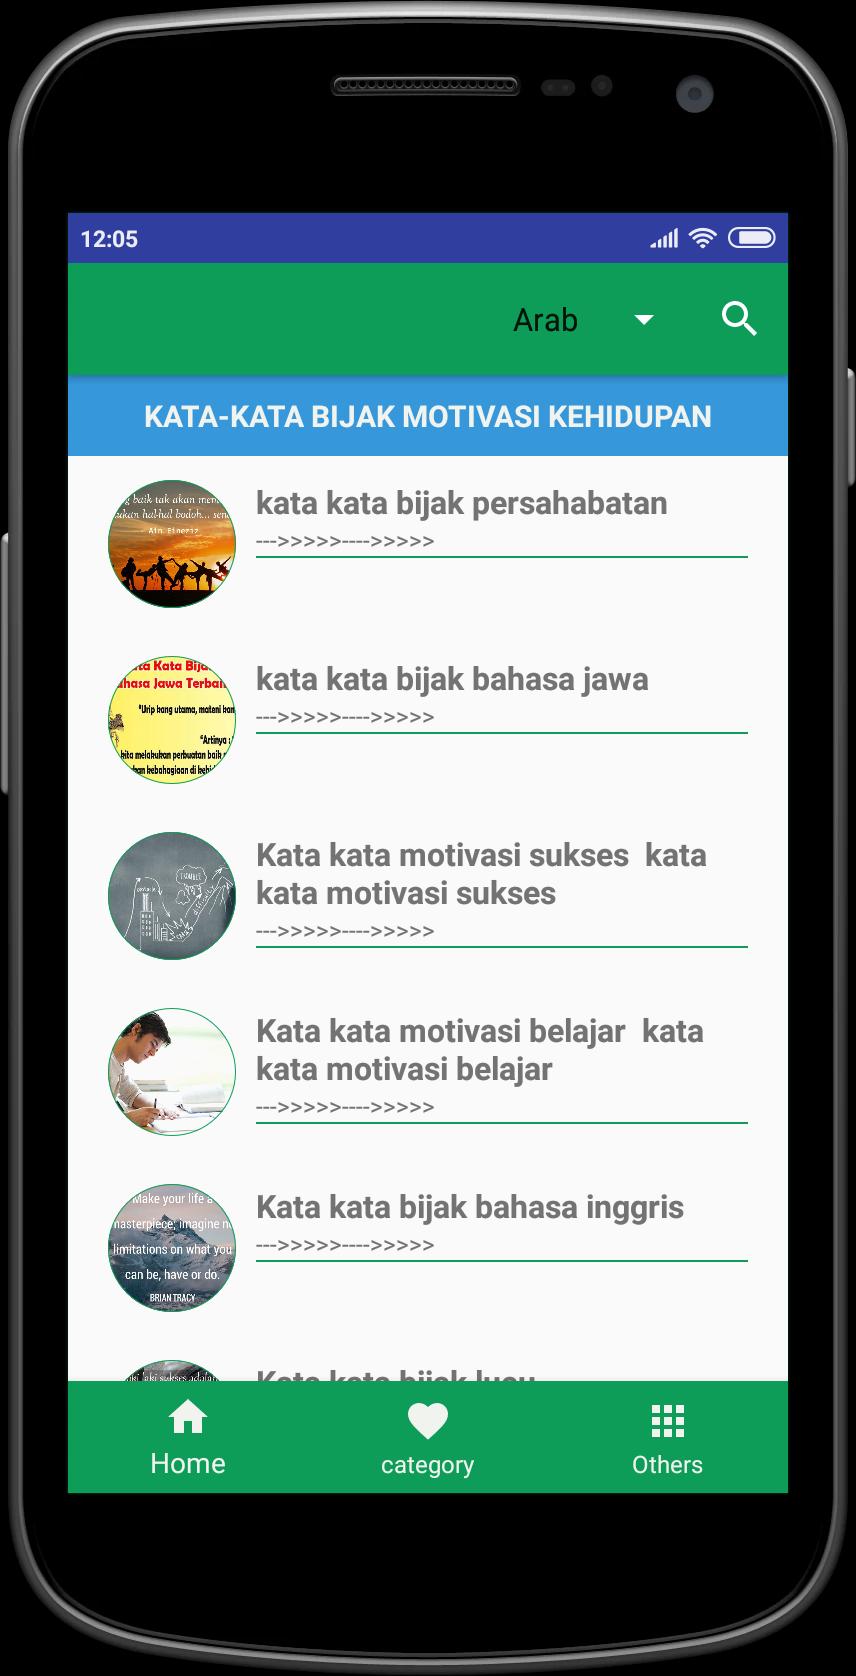 Kata Kata Bijak Motivasi Kehidupan For Android Apk Download